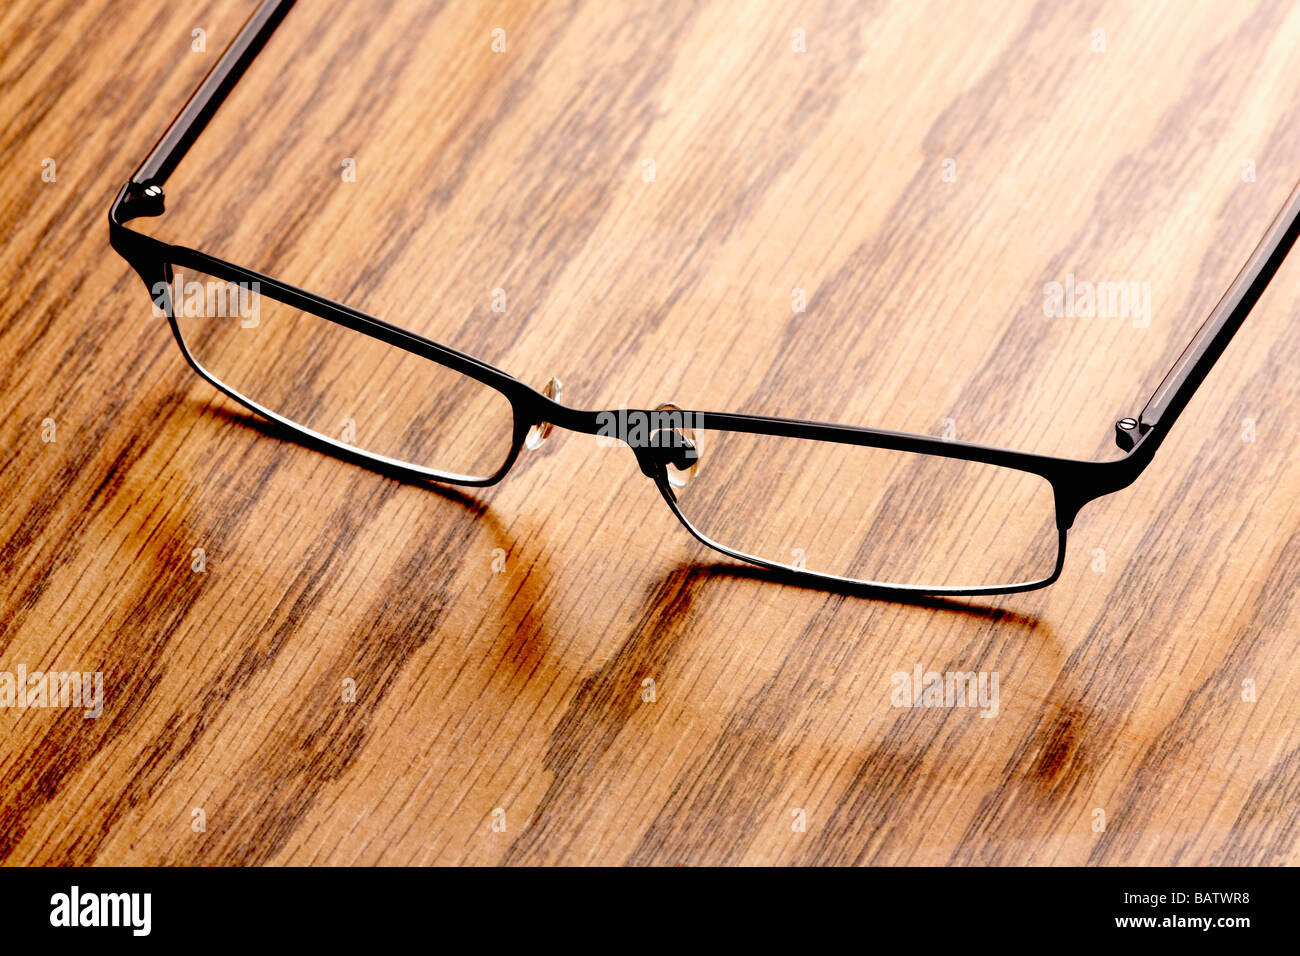 Eyeglasses on wood grain Stock Photo